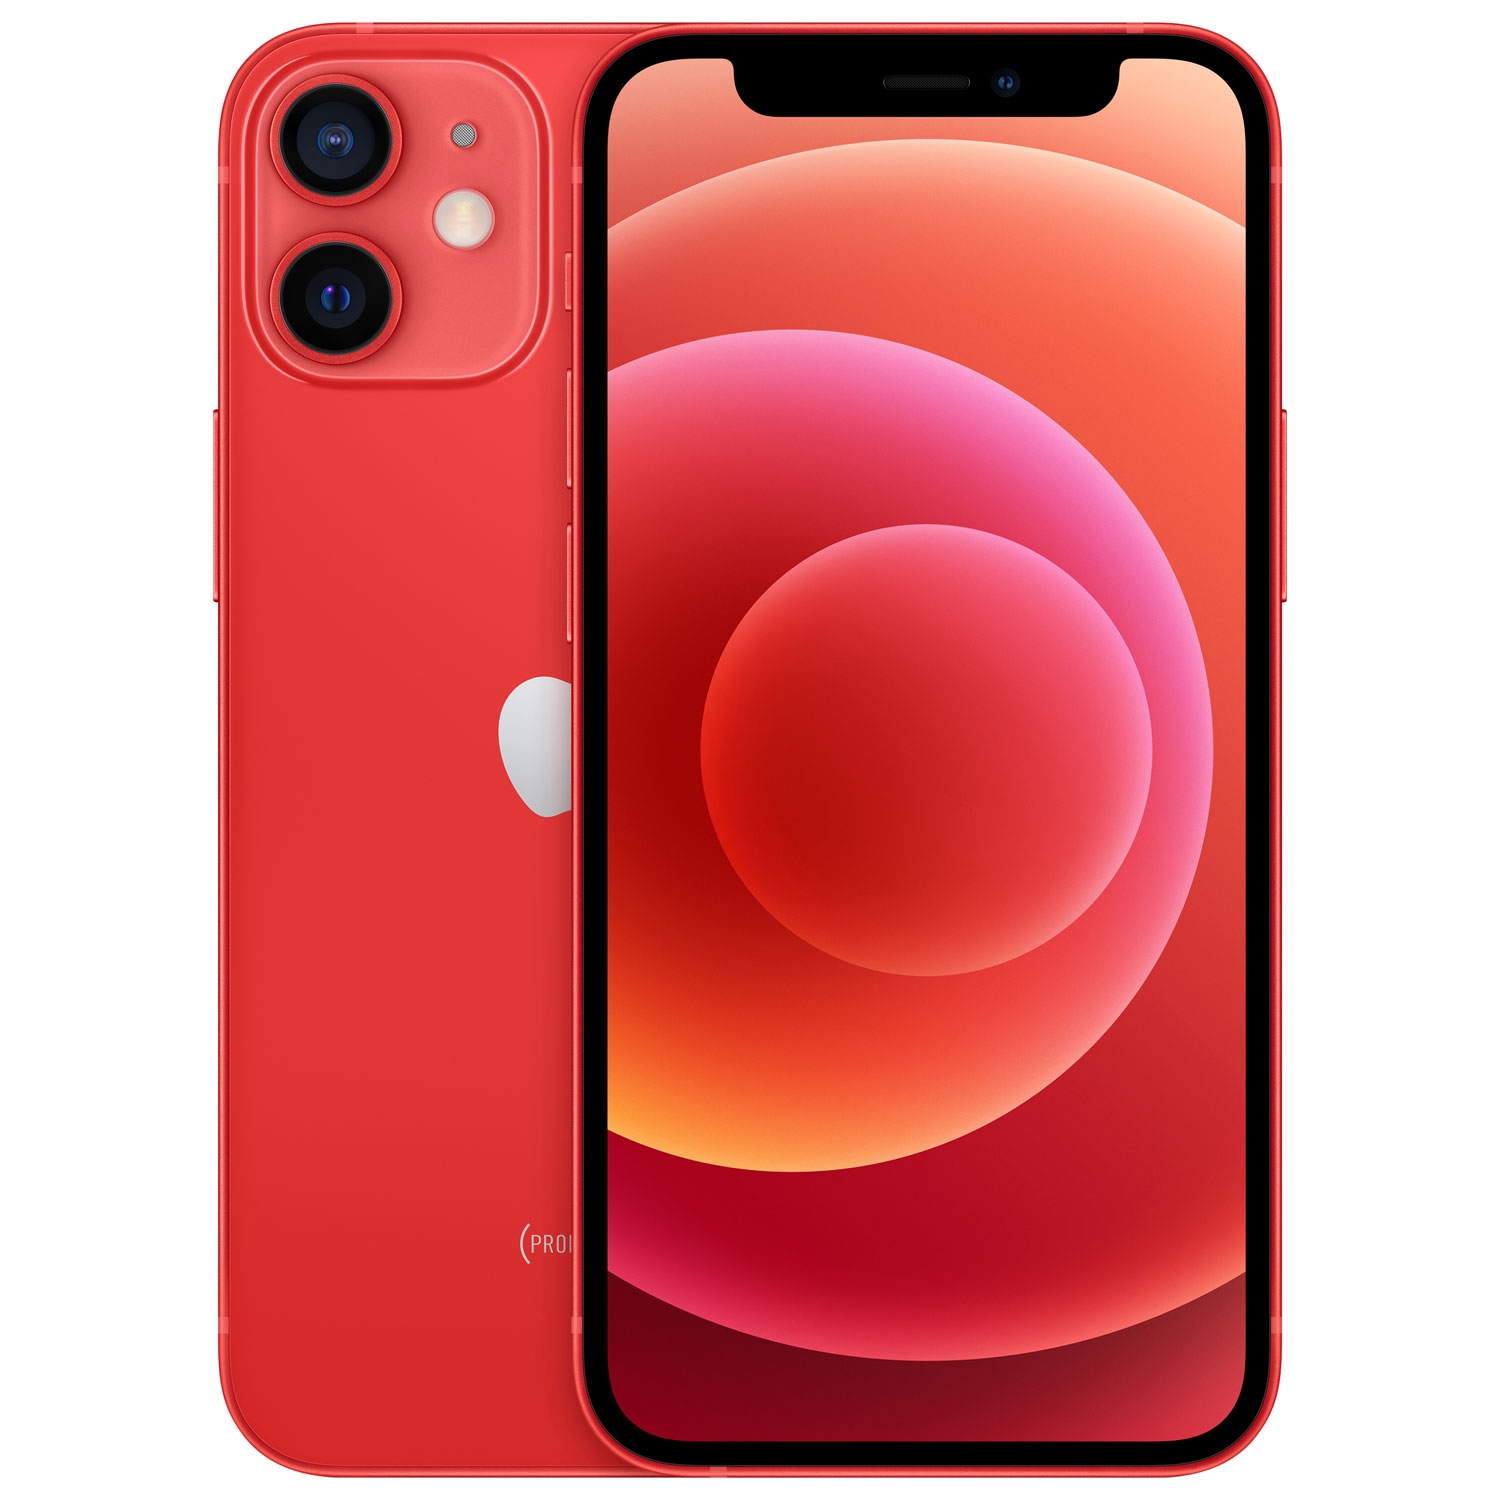 Refurbished (Good) - Apple iPhone 12 mini 64GB Smartphone - (PRODUCT) RED - Unlocked